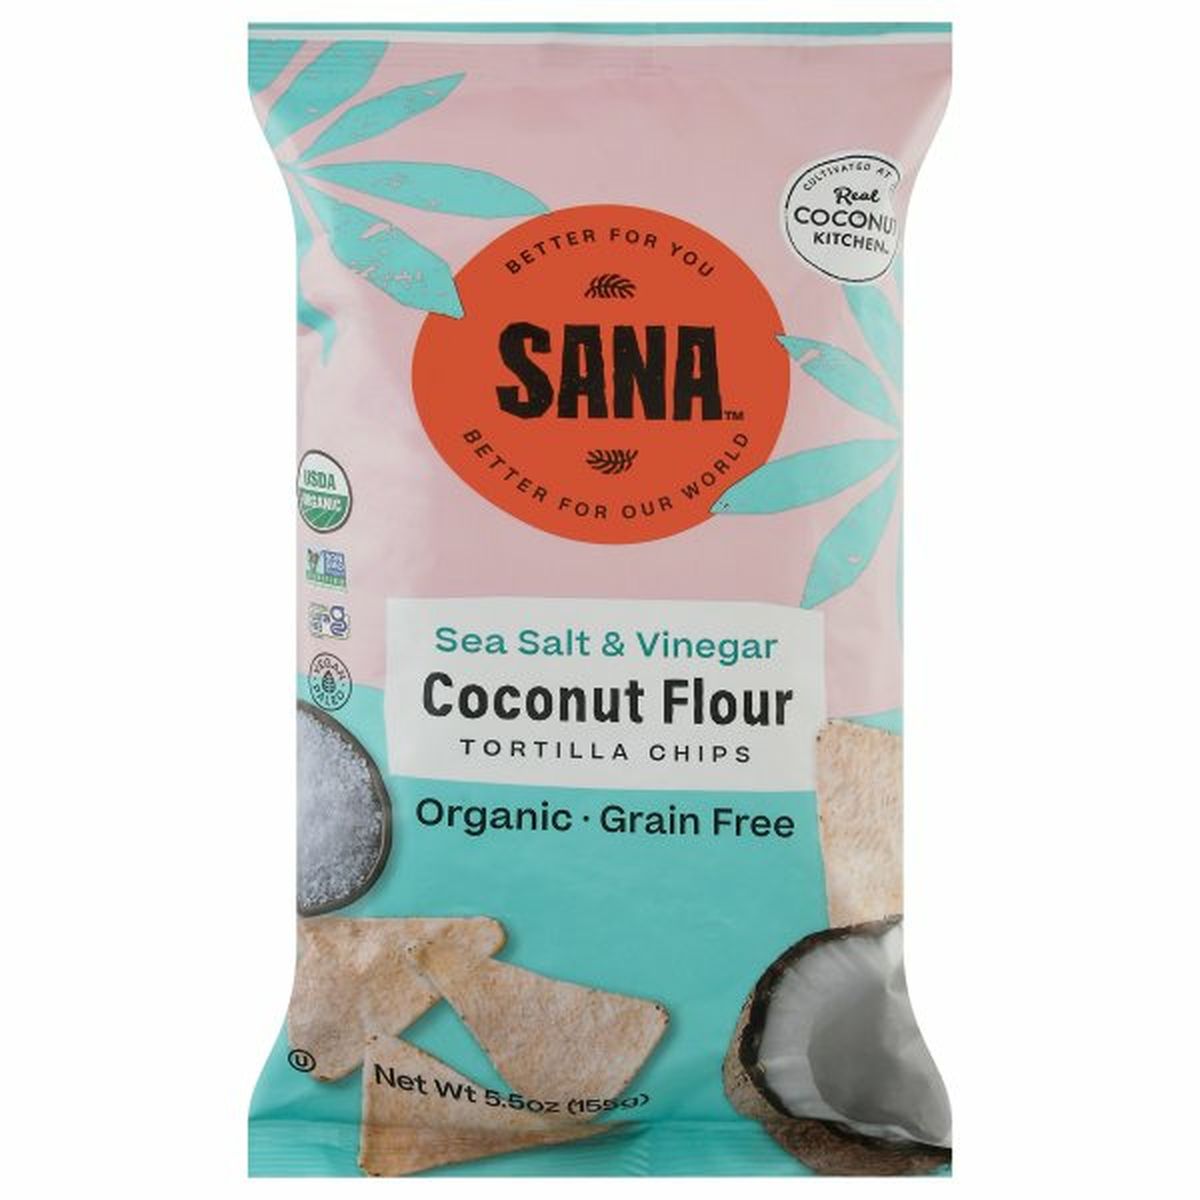 Calories in Real Coconut Tortilla Chips, Coconut Flour, Sea Salt & Vinegar